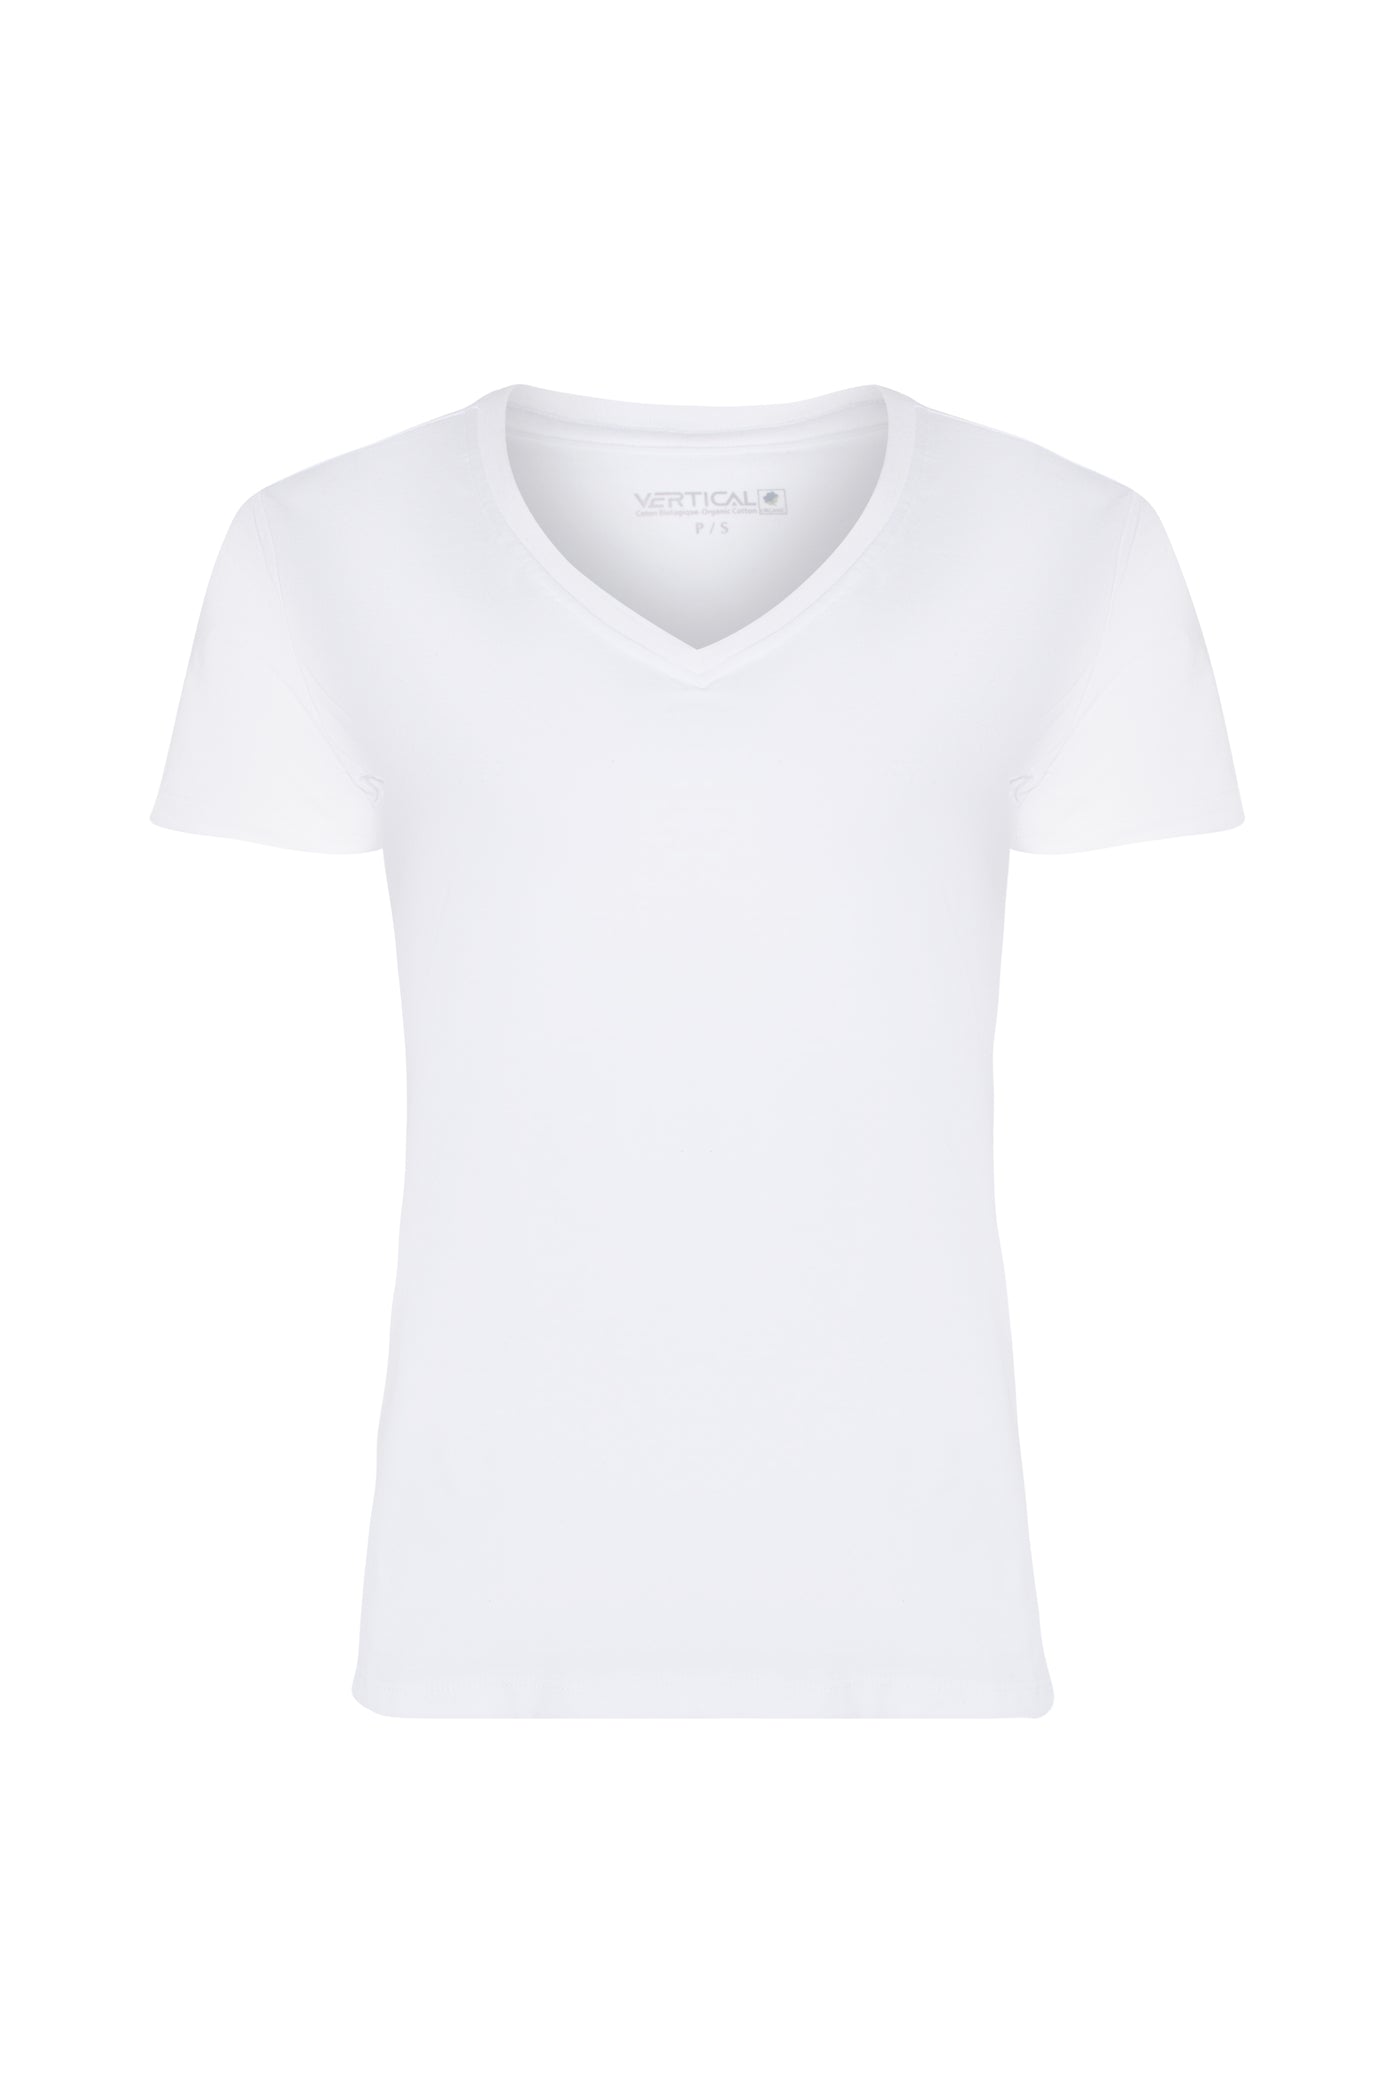 T-Shirt le V II - Femme - 50% de rabais